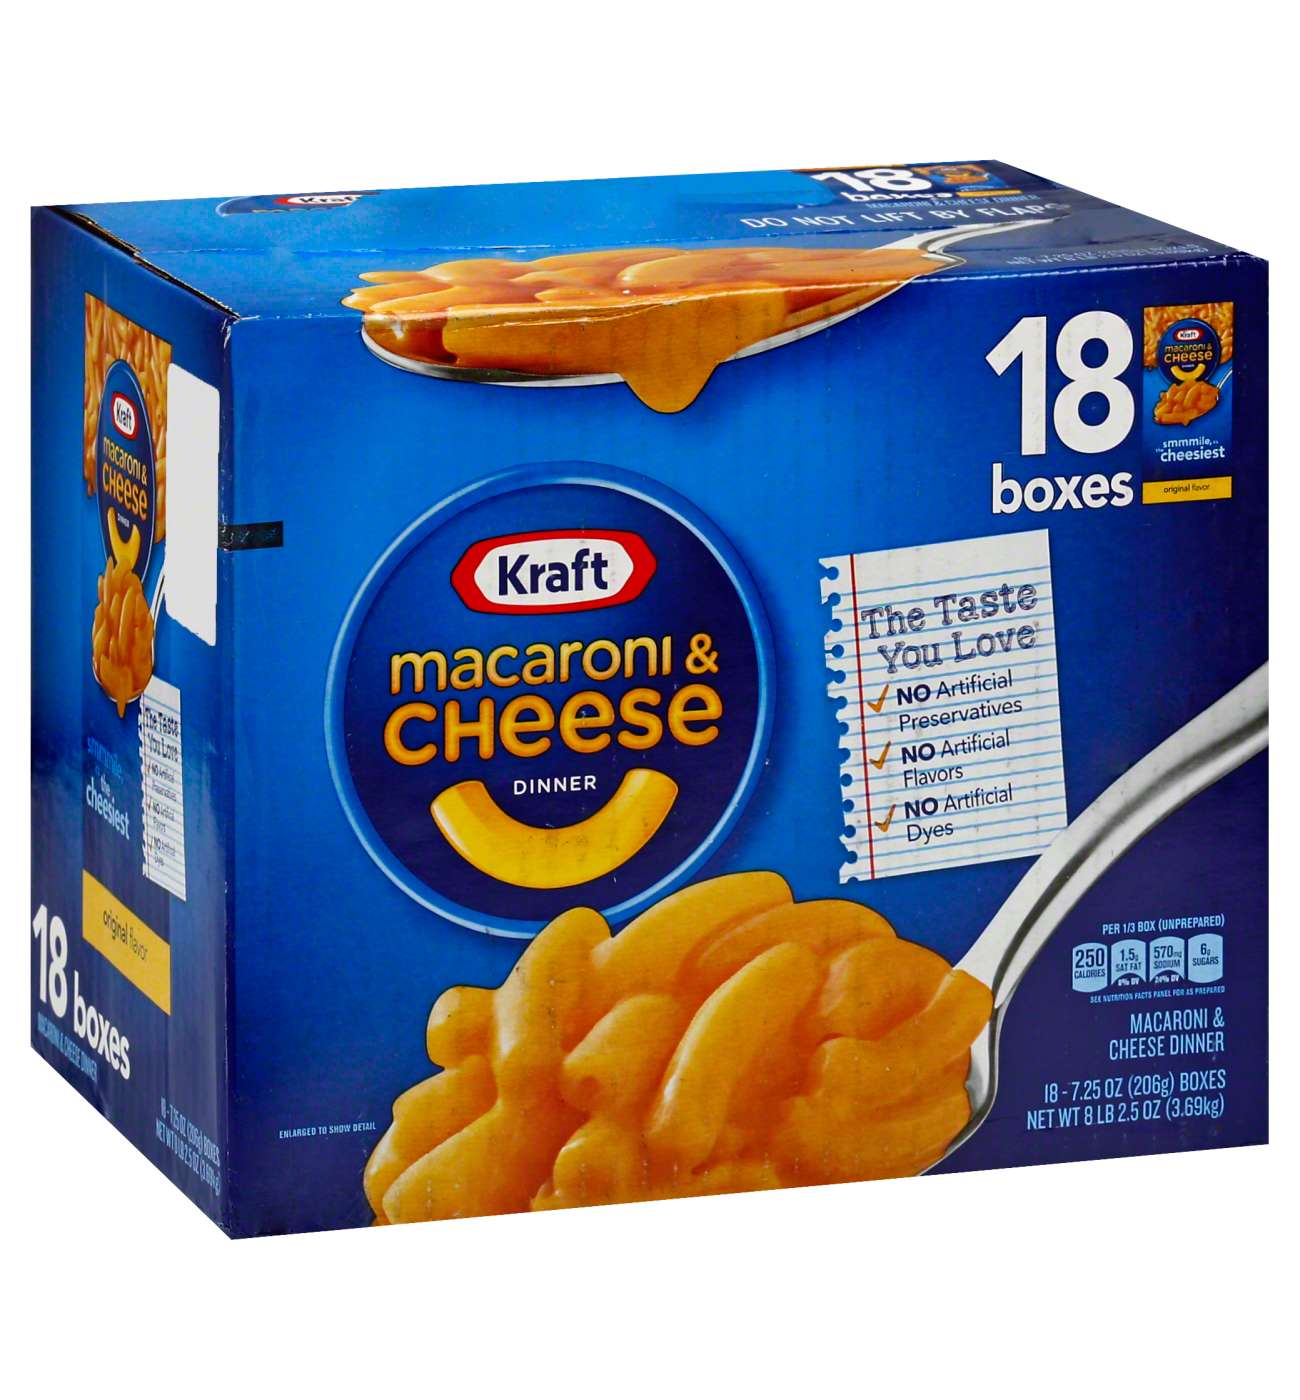 Kraft Macaroni & Cheese Dinner, 18 Boxes; image 1 of 2